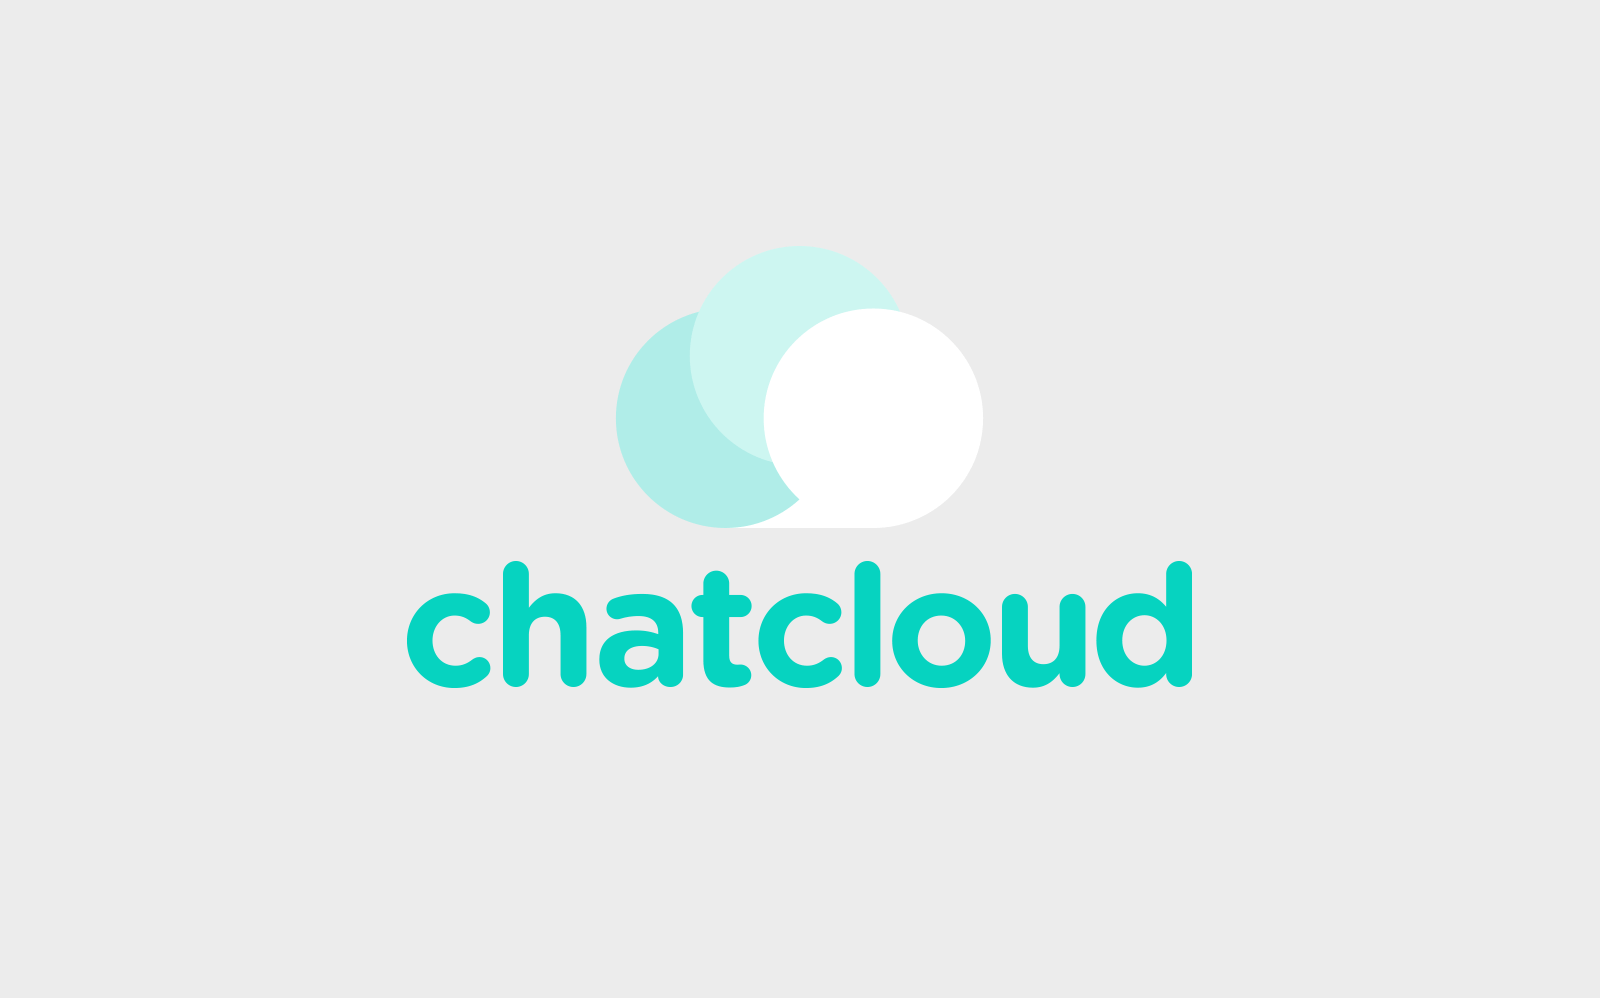 Chatcloud small business logo design